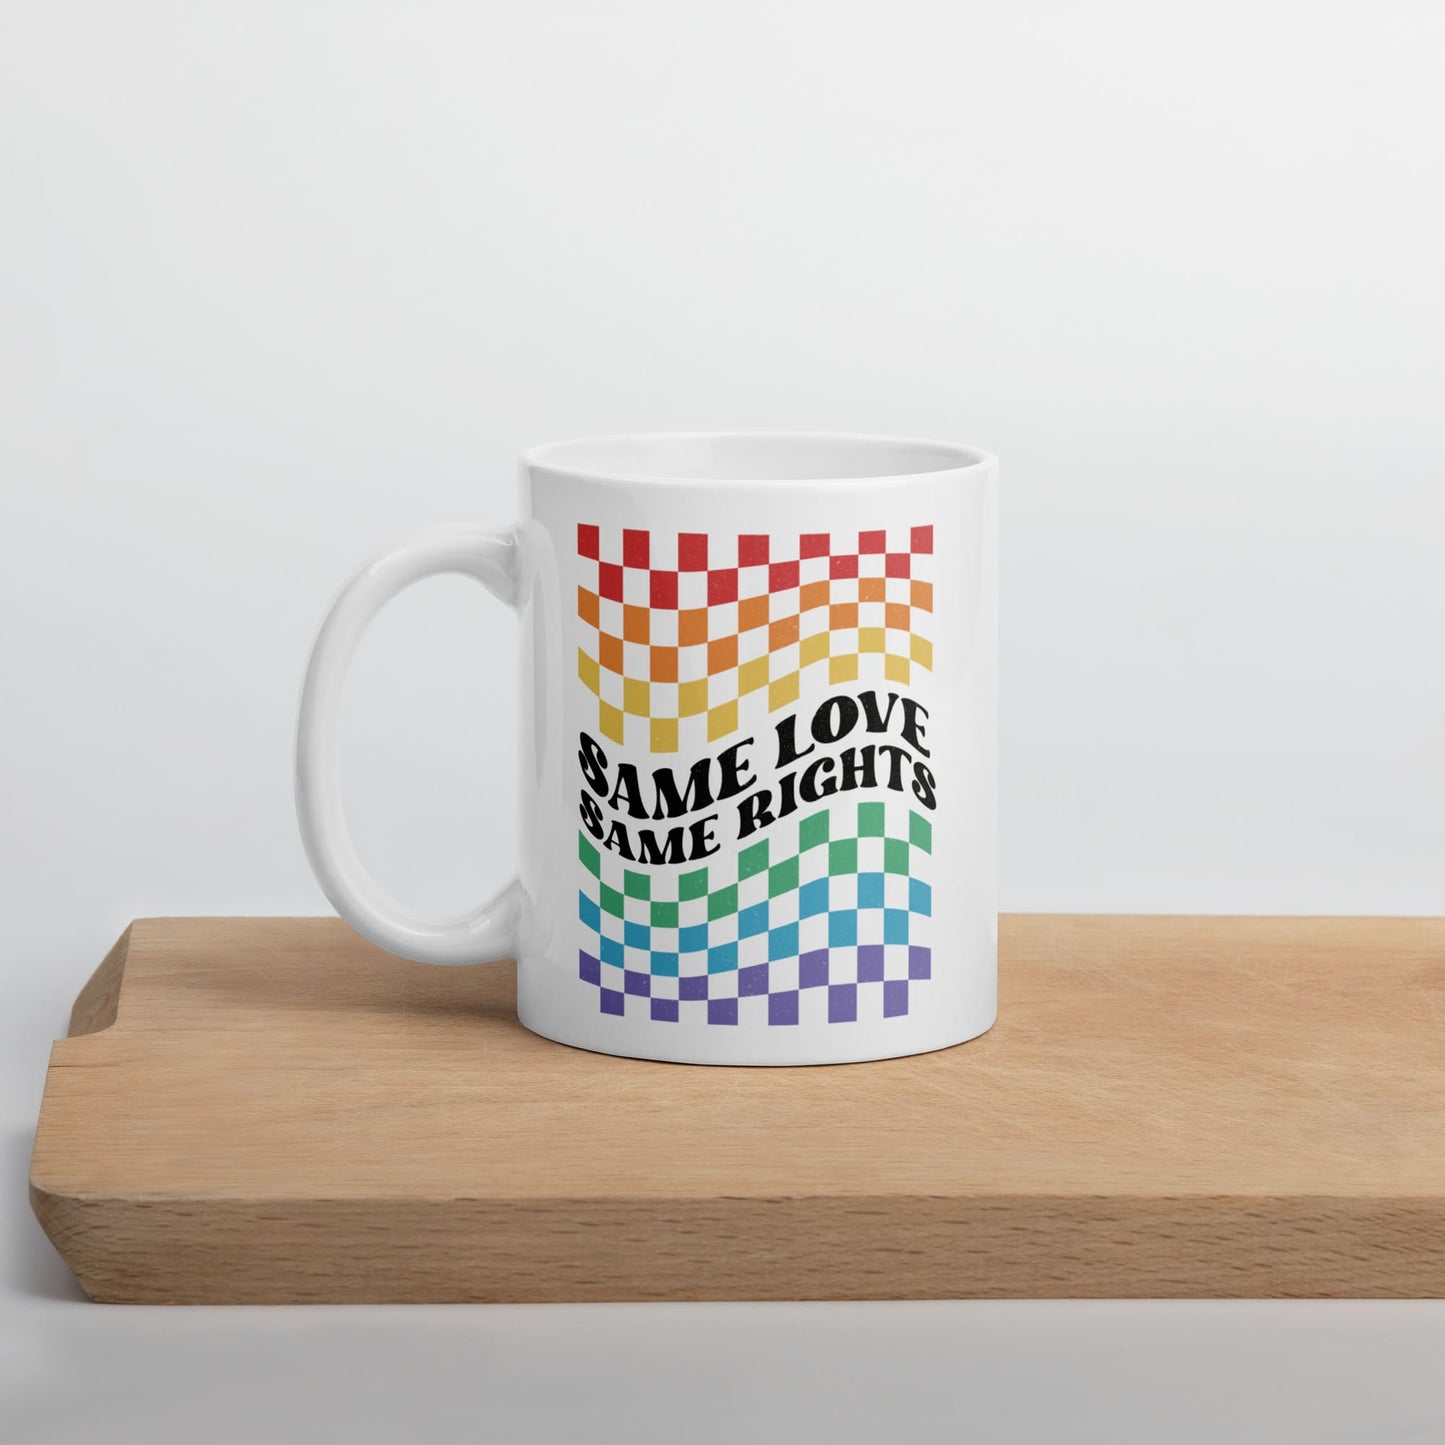 LGBTQ mug, same love same rights pride coffee or tea cup on table